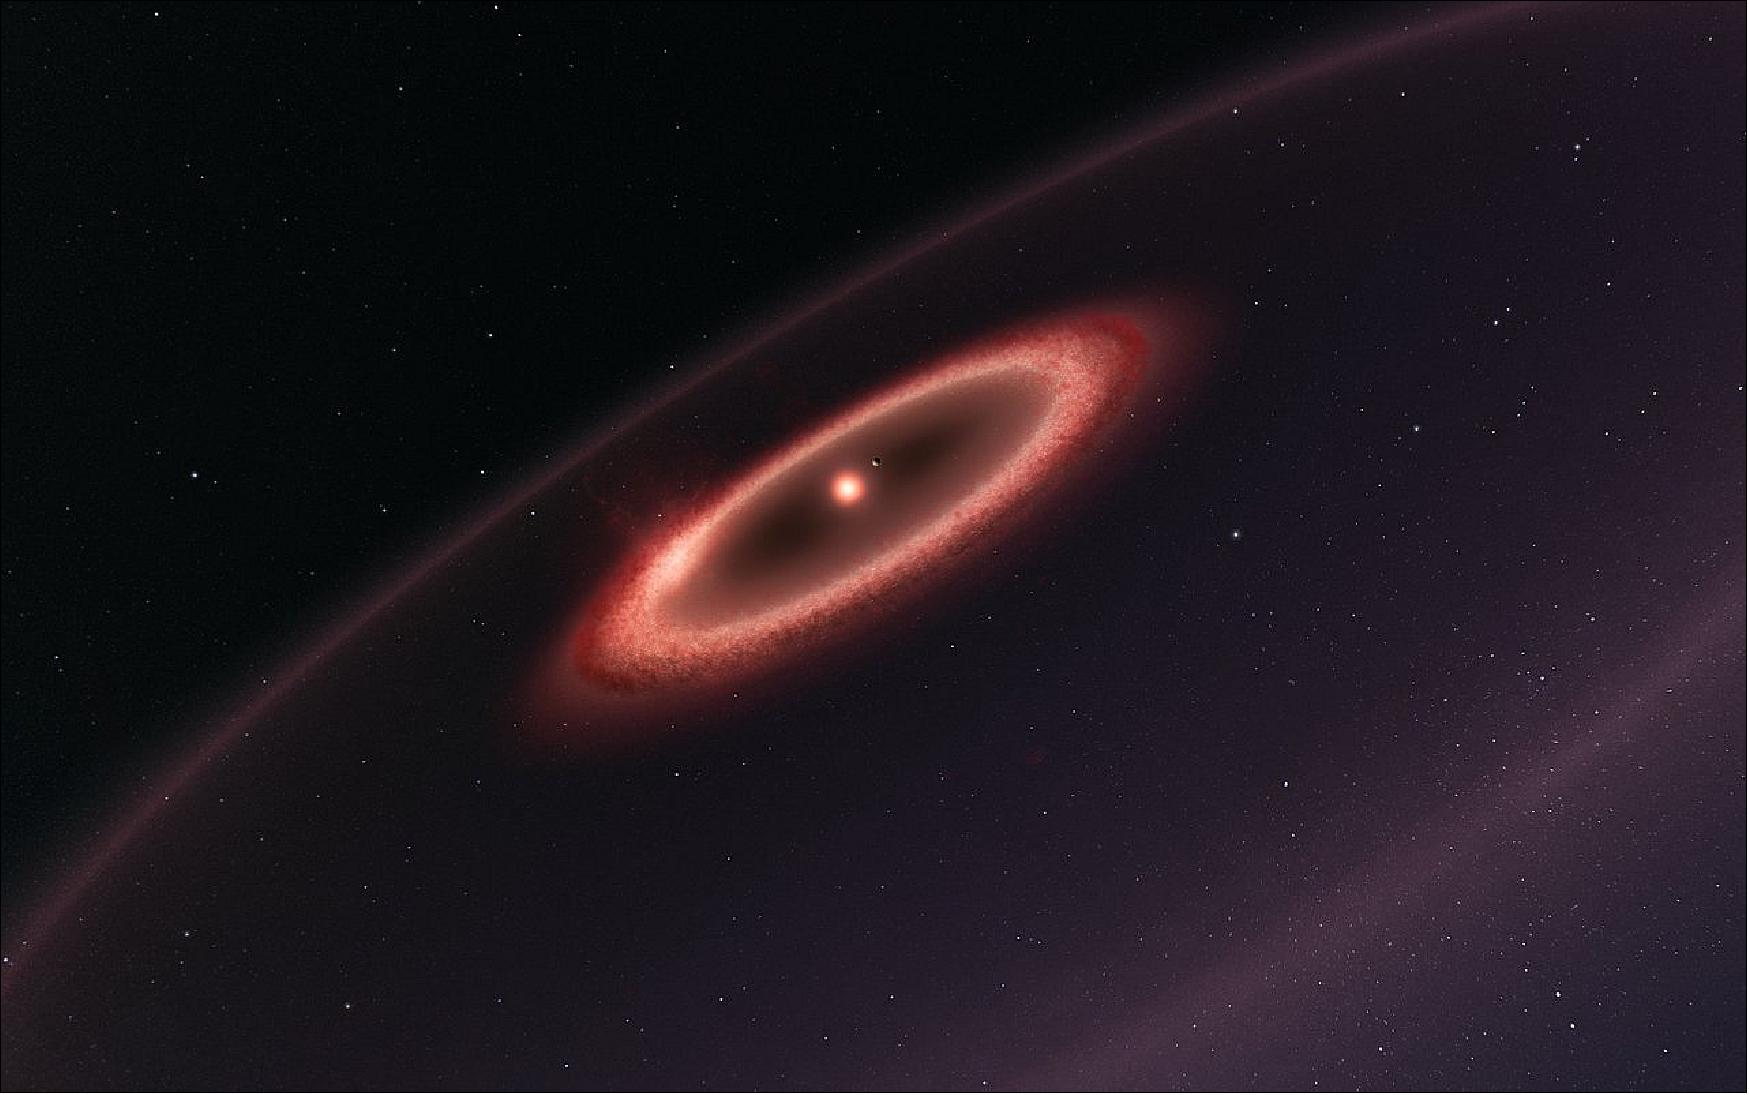 Figure 29: Artist's impression of the dust belts around Proxima Centauri (image credit: ESO, Release No: eso1735) 31)